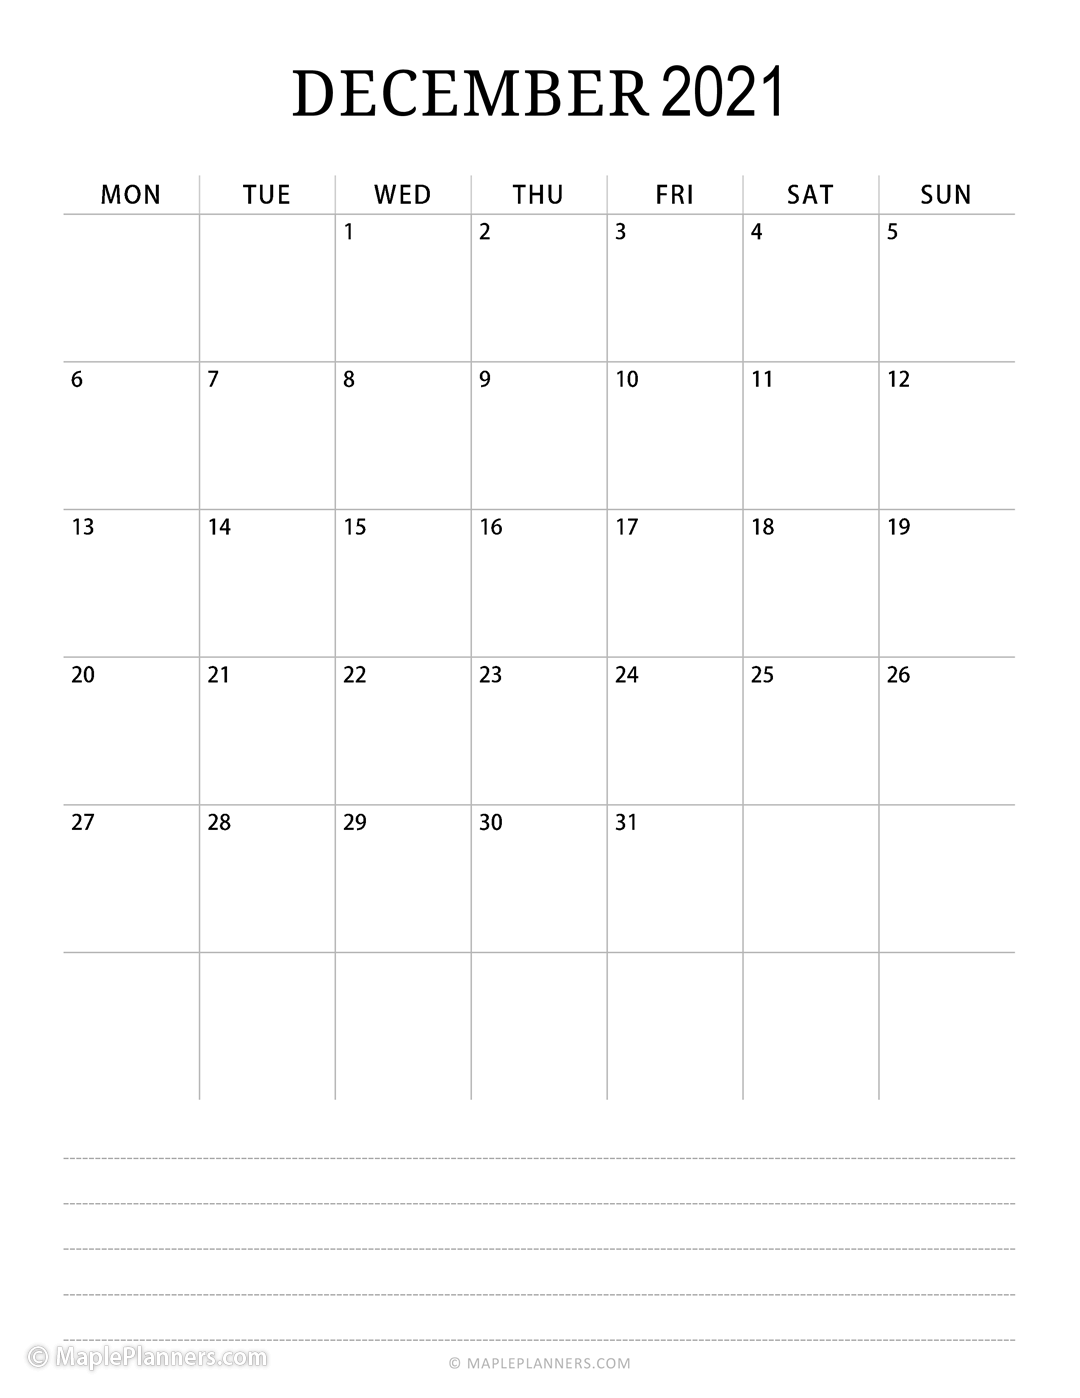 December 2021 Monthly Calendar Vertical Layout